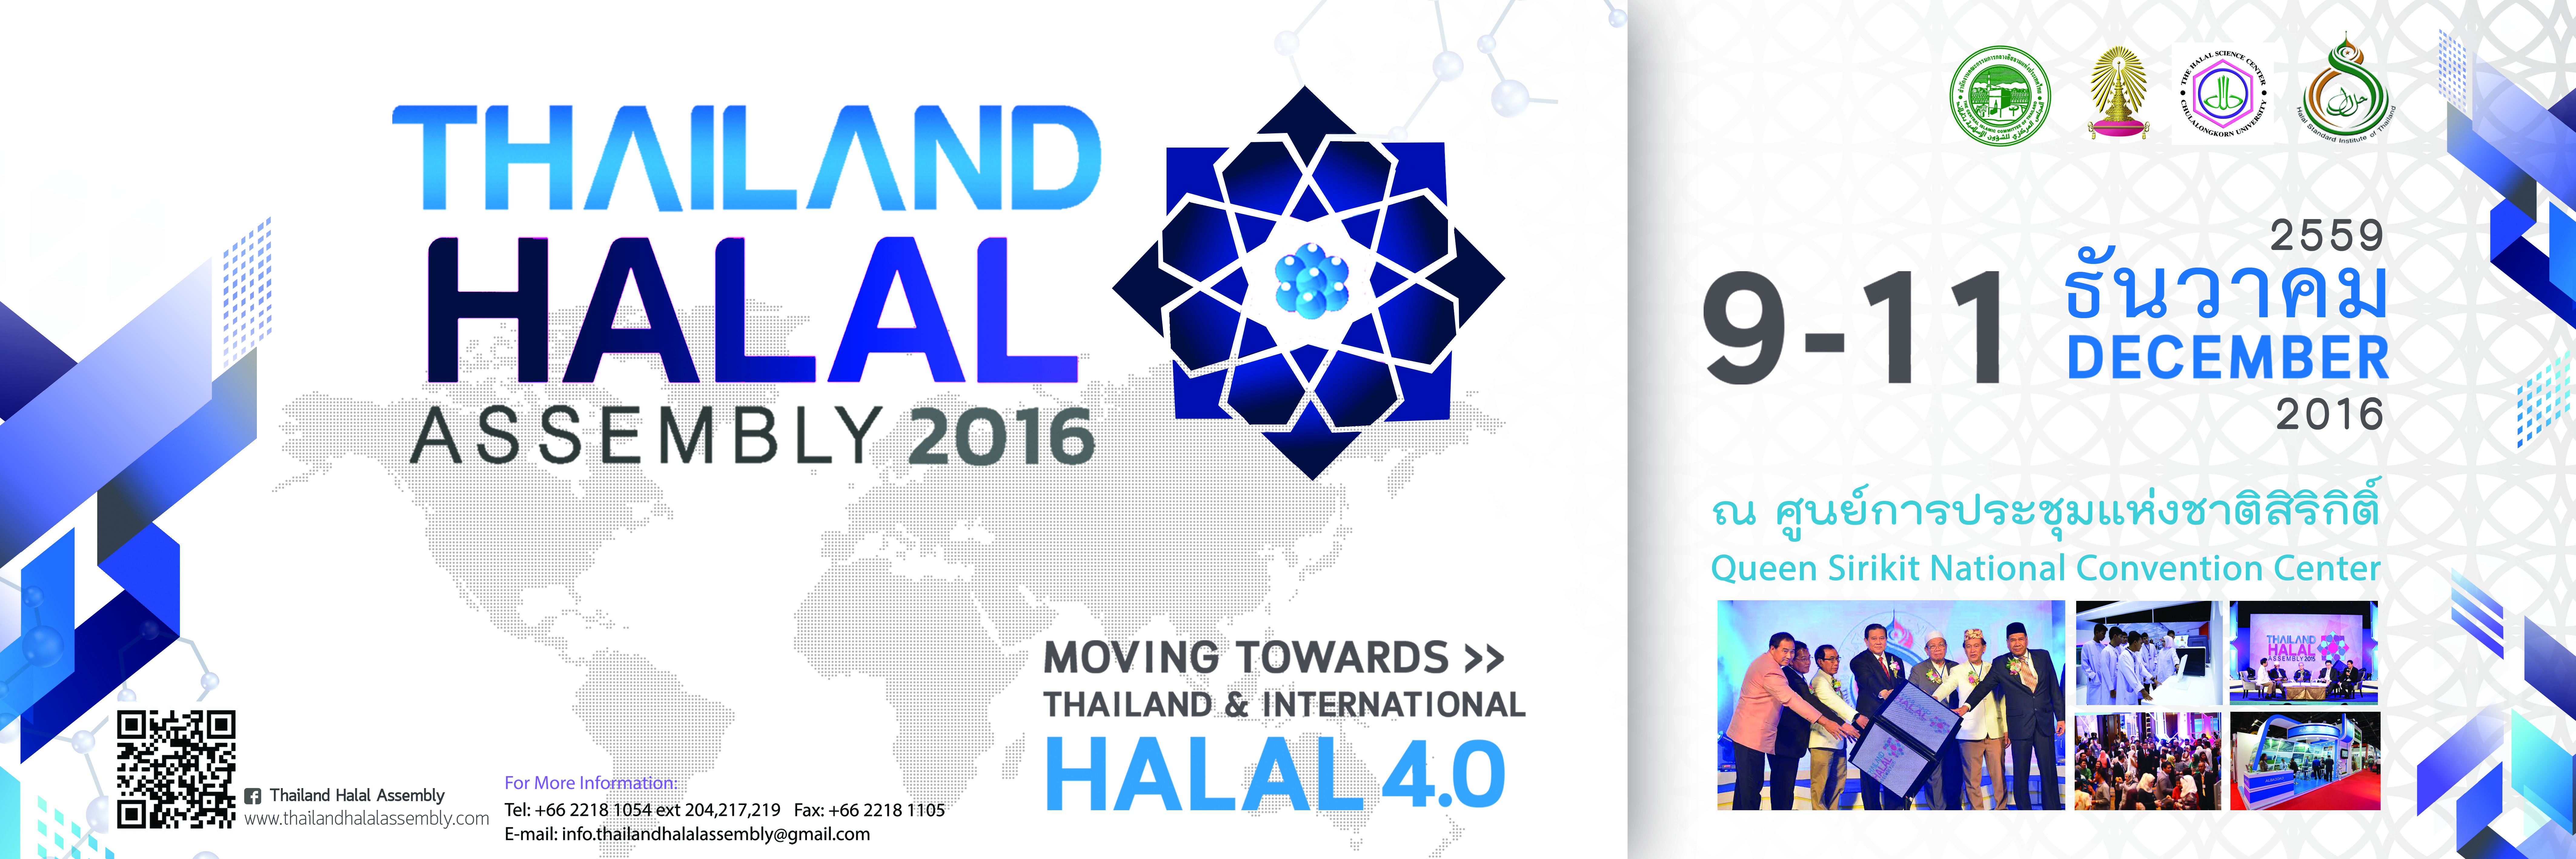 Thailand Halal Assembly 2016 9 11 Dec 2016